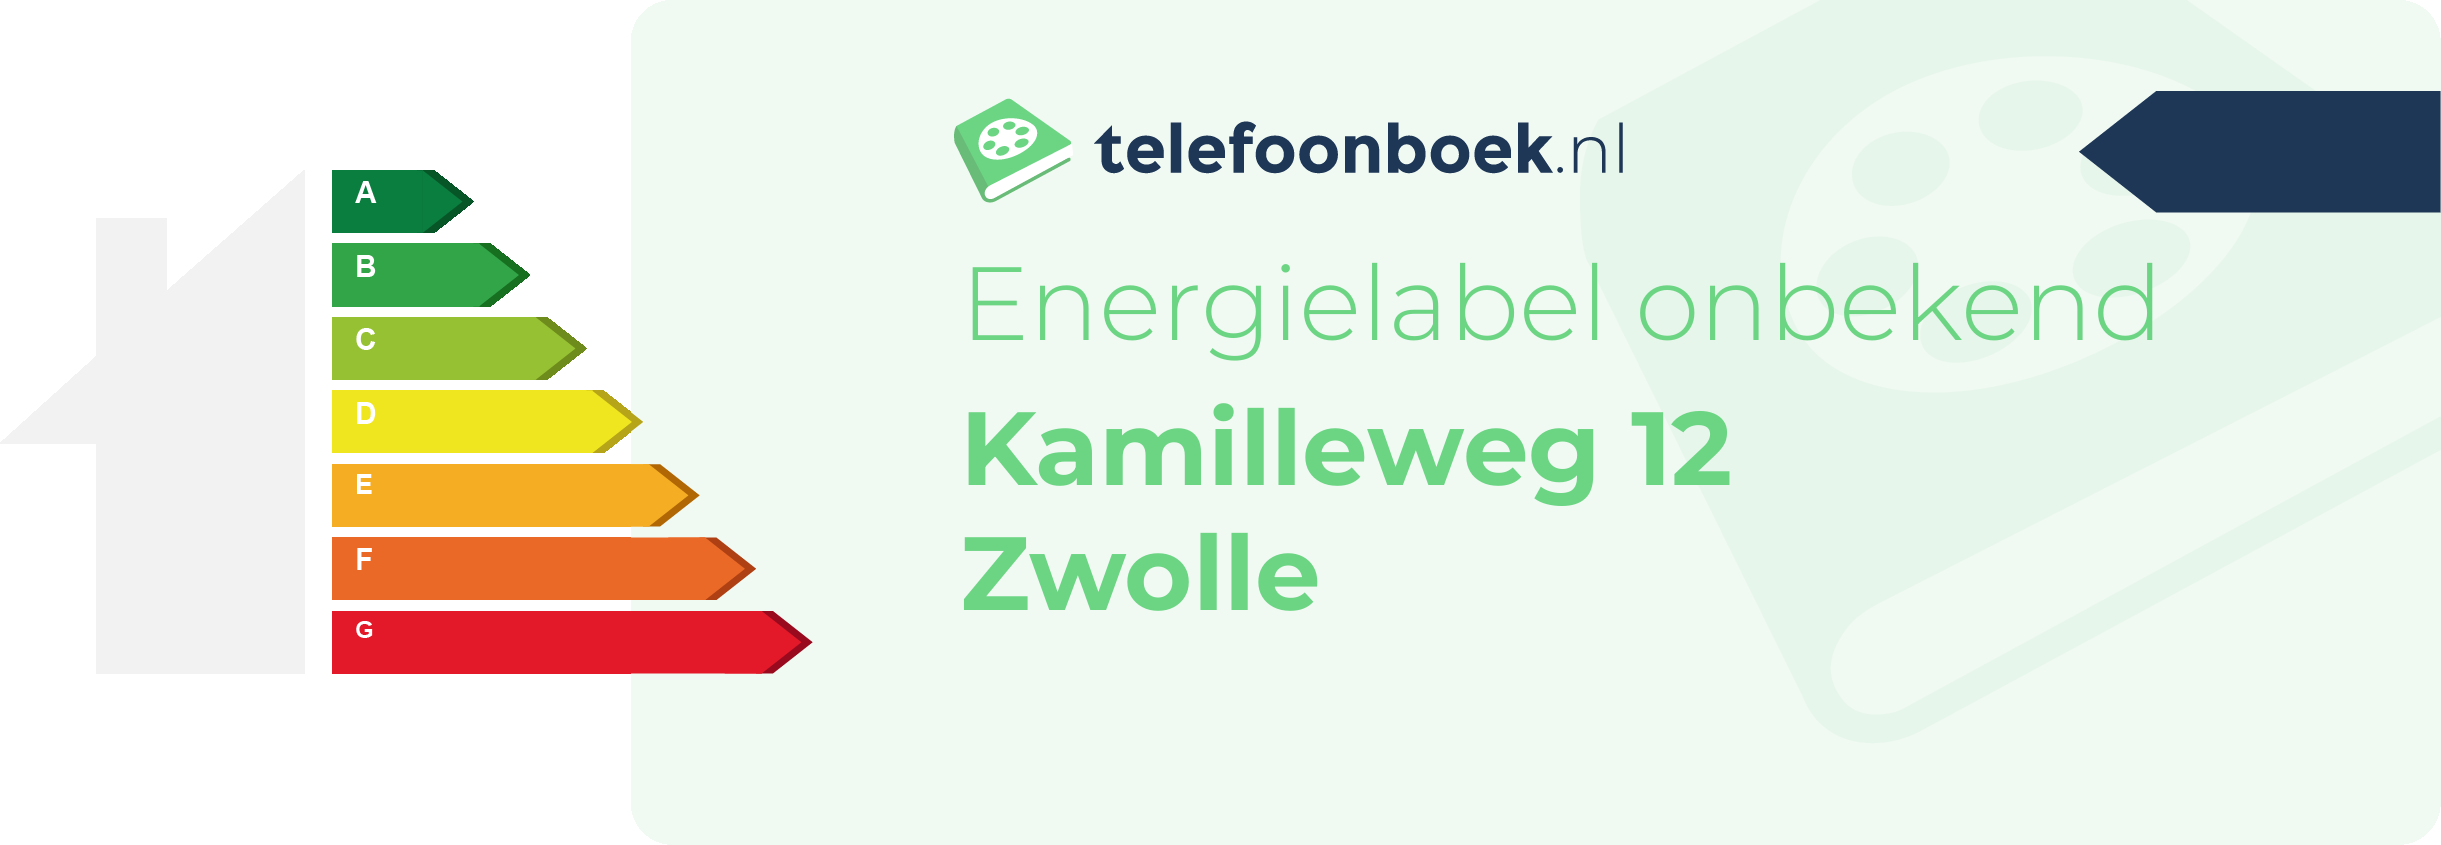 Energielabel Kamilleweg 12 Zwolle